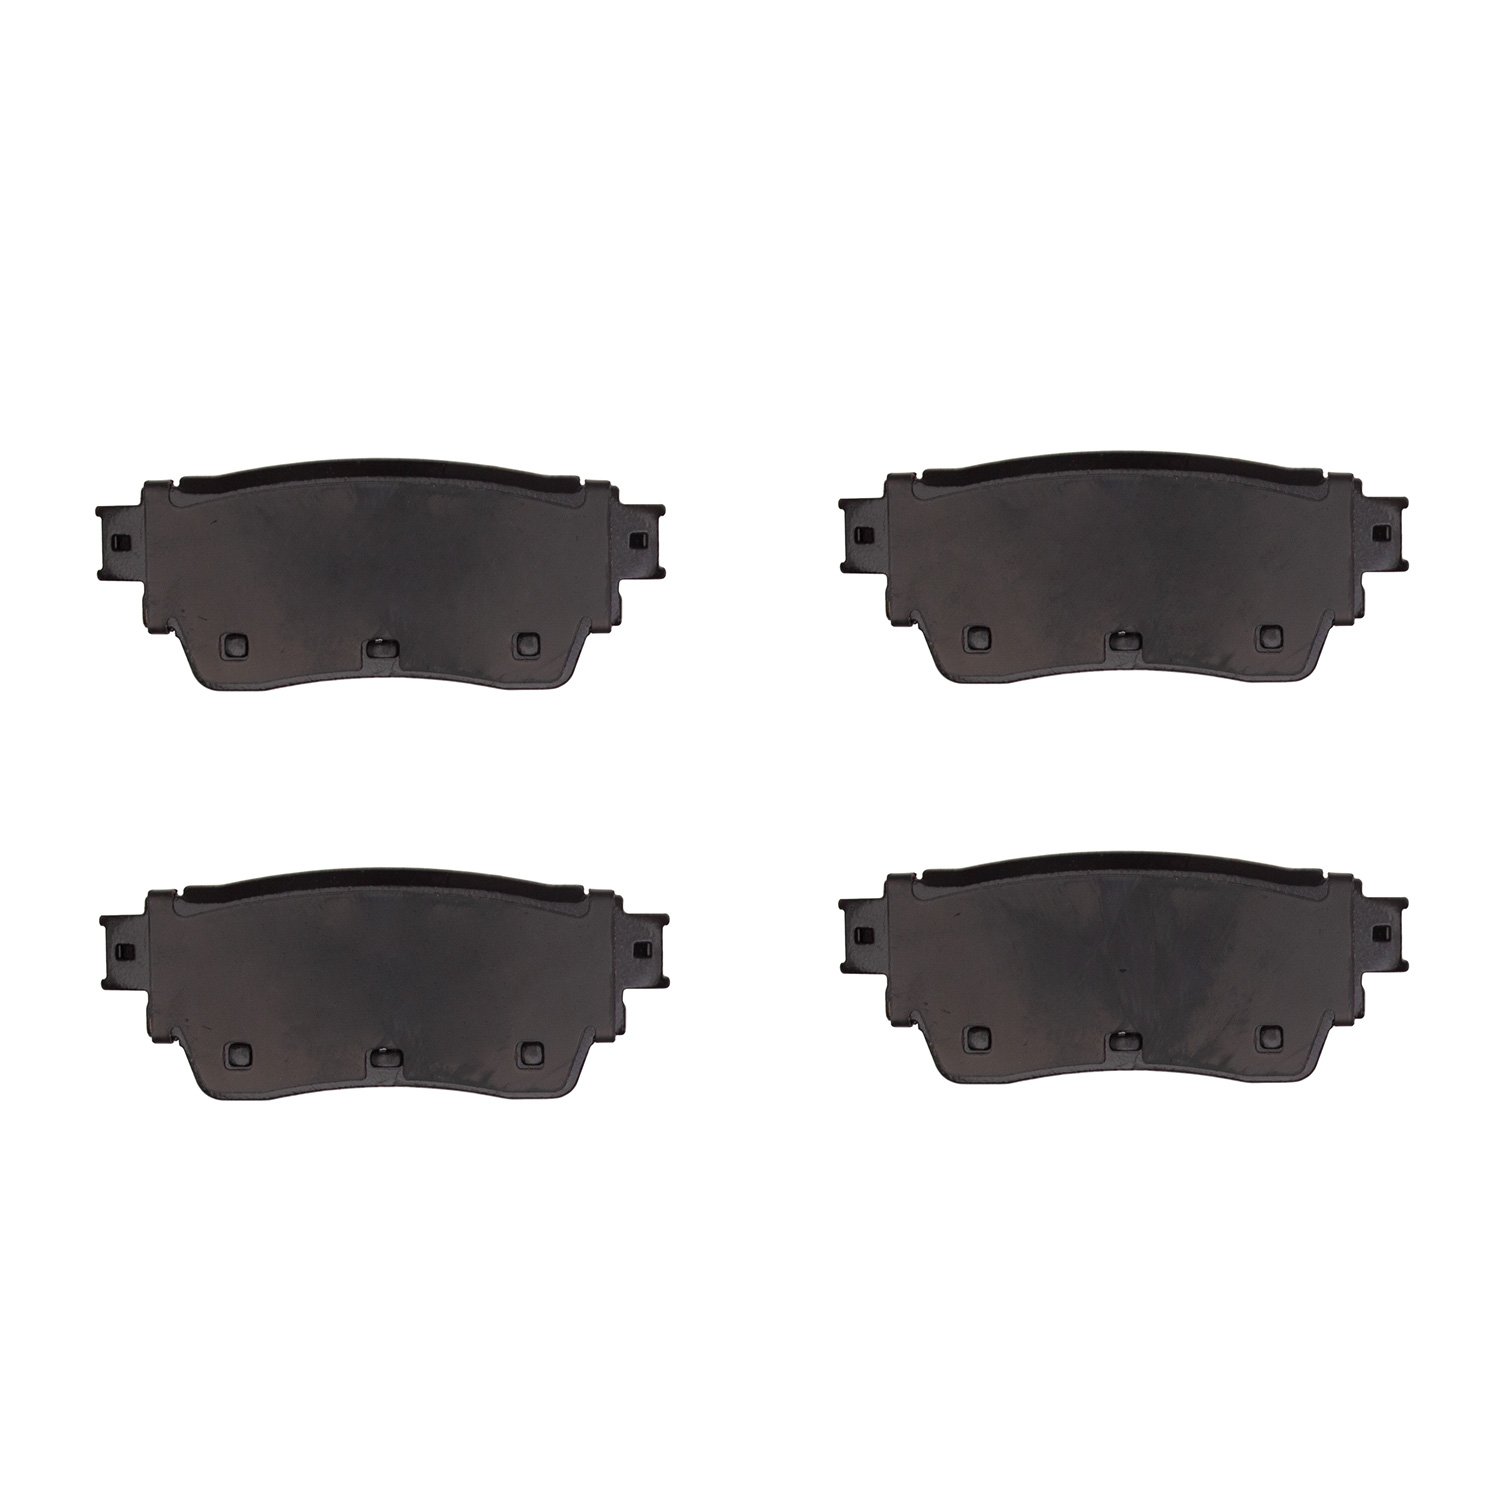 1310-2200-00 3000-Series Ceramic Brake Pads, Fits Select Multiple Makes/Models, Position: Rear